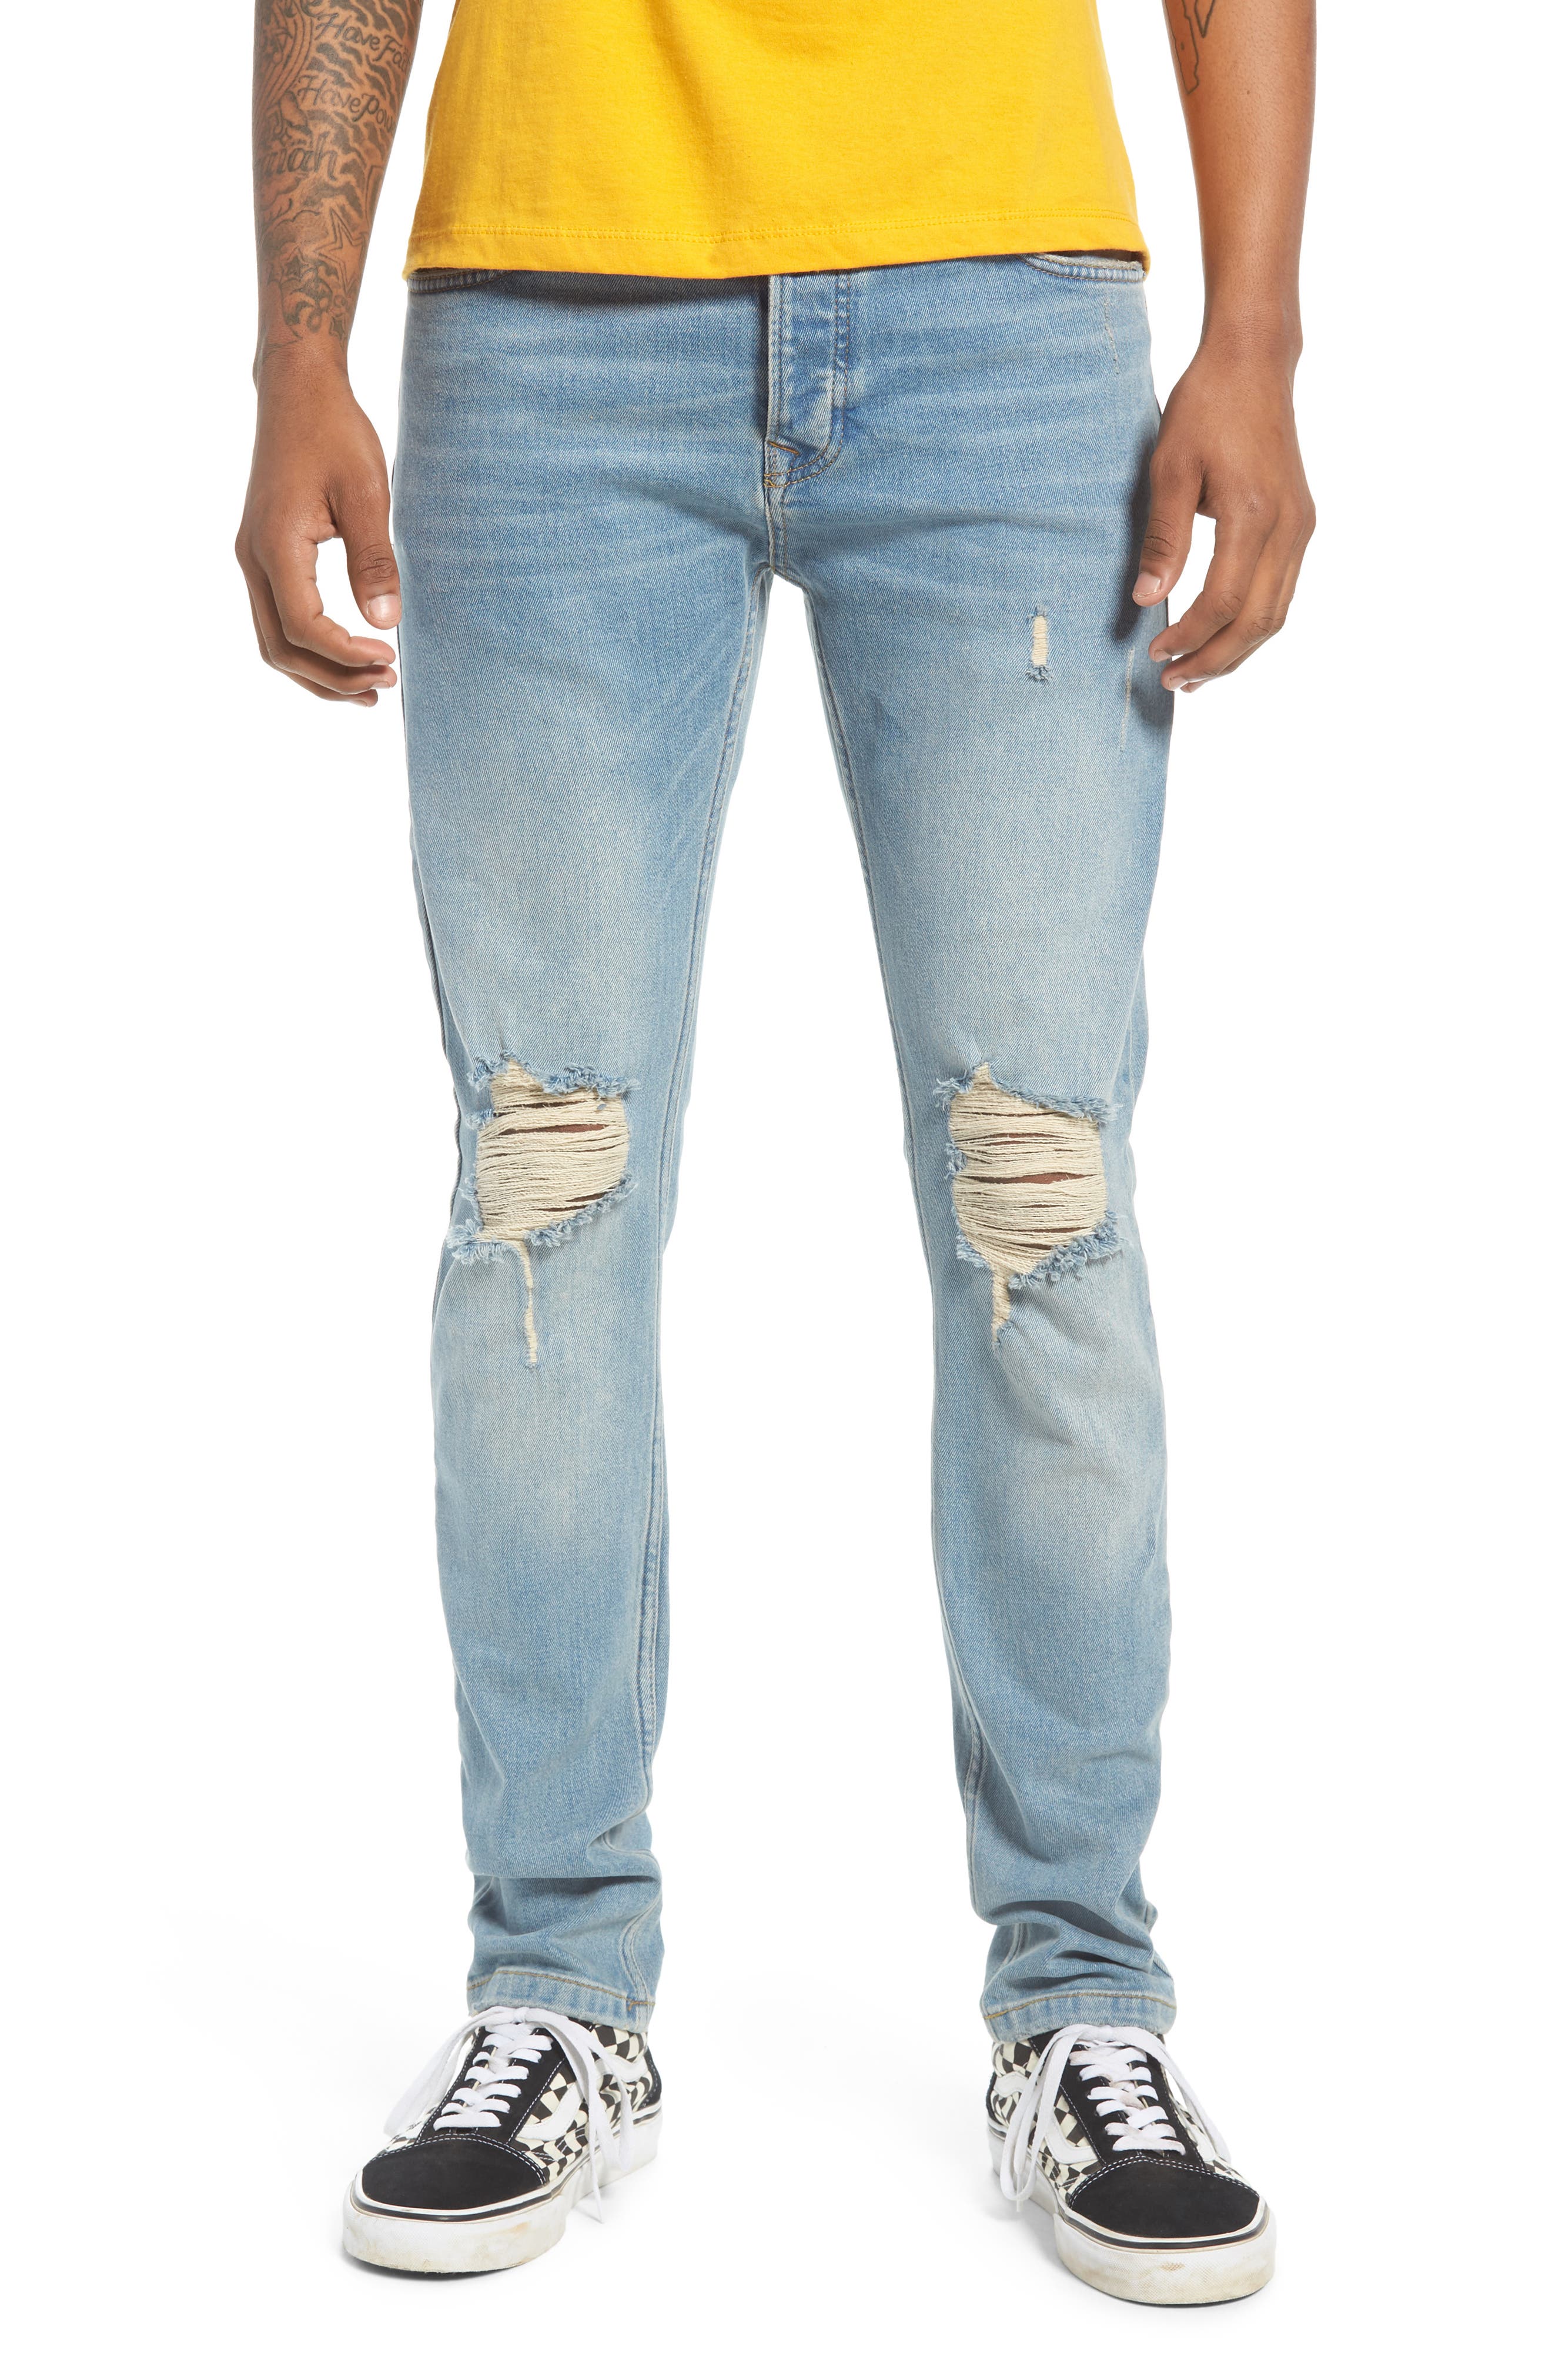 hudson supermodel bootcut jeans